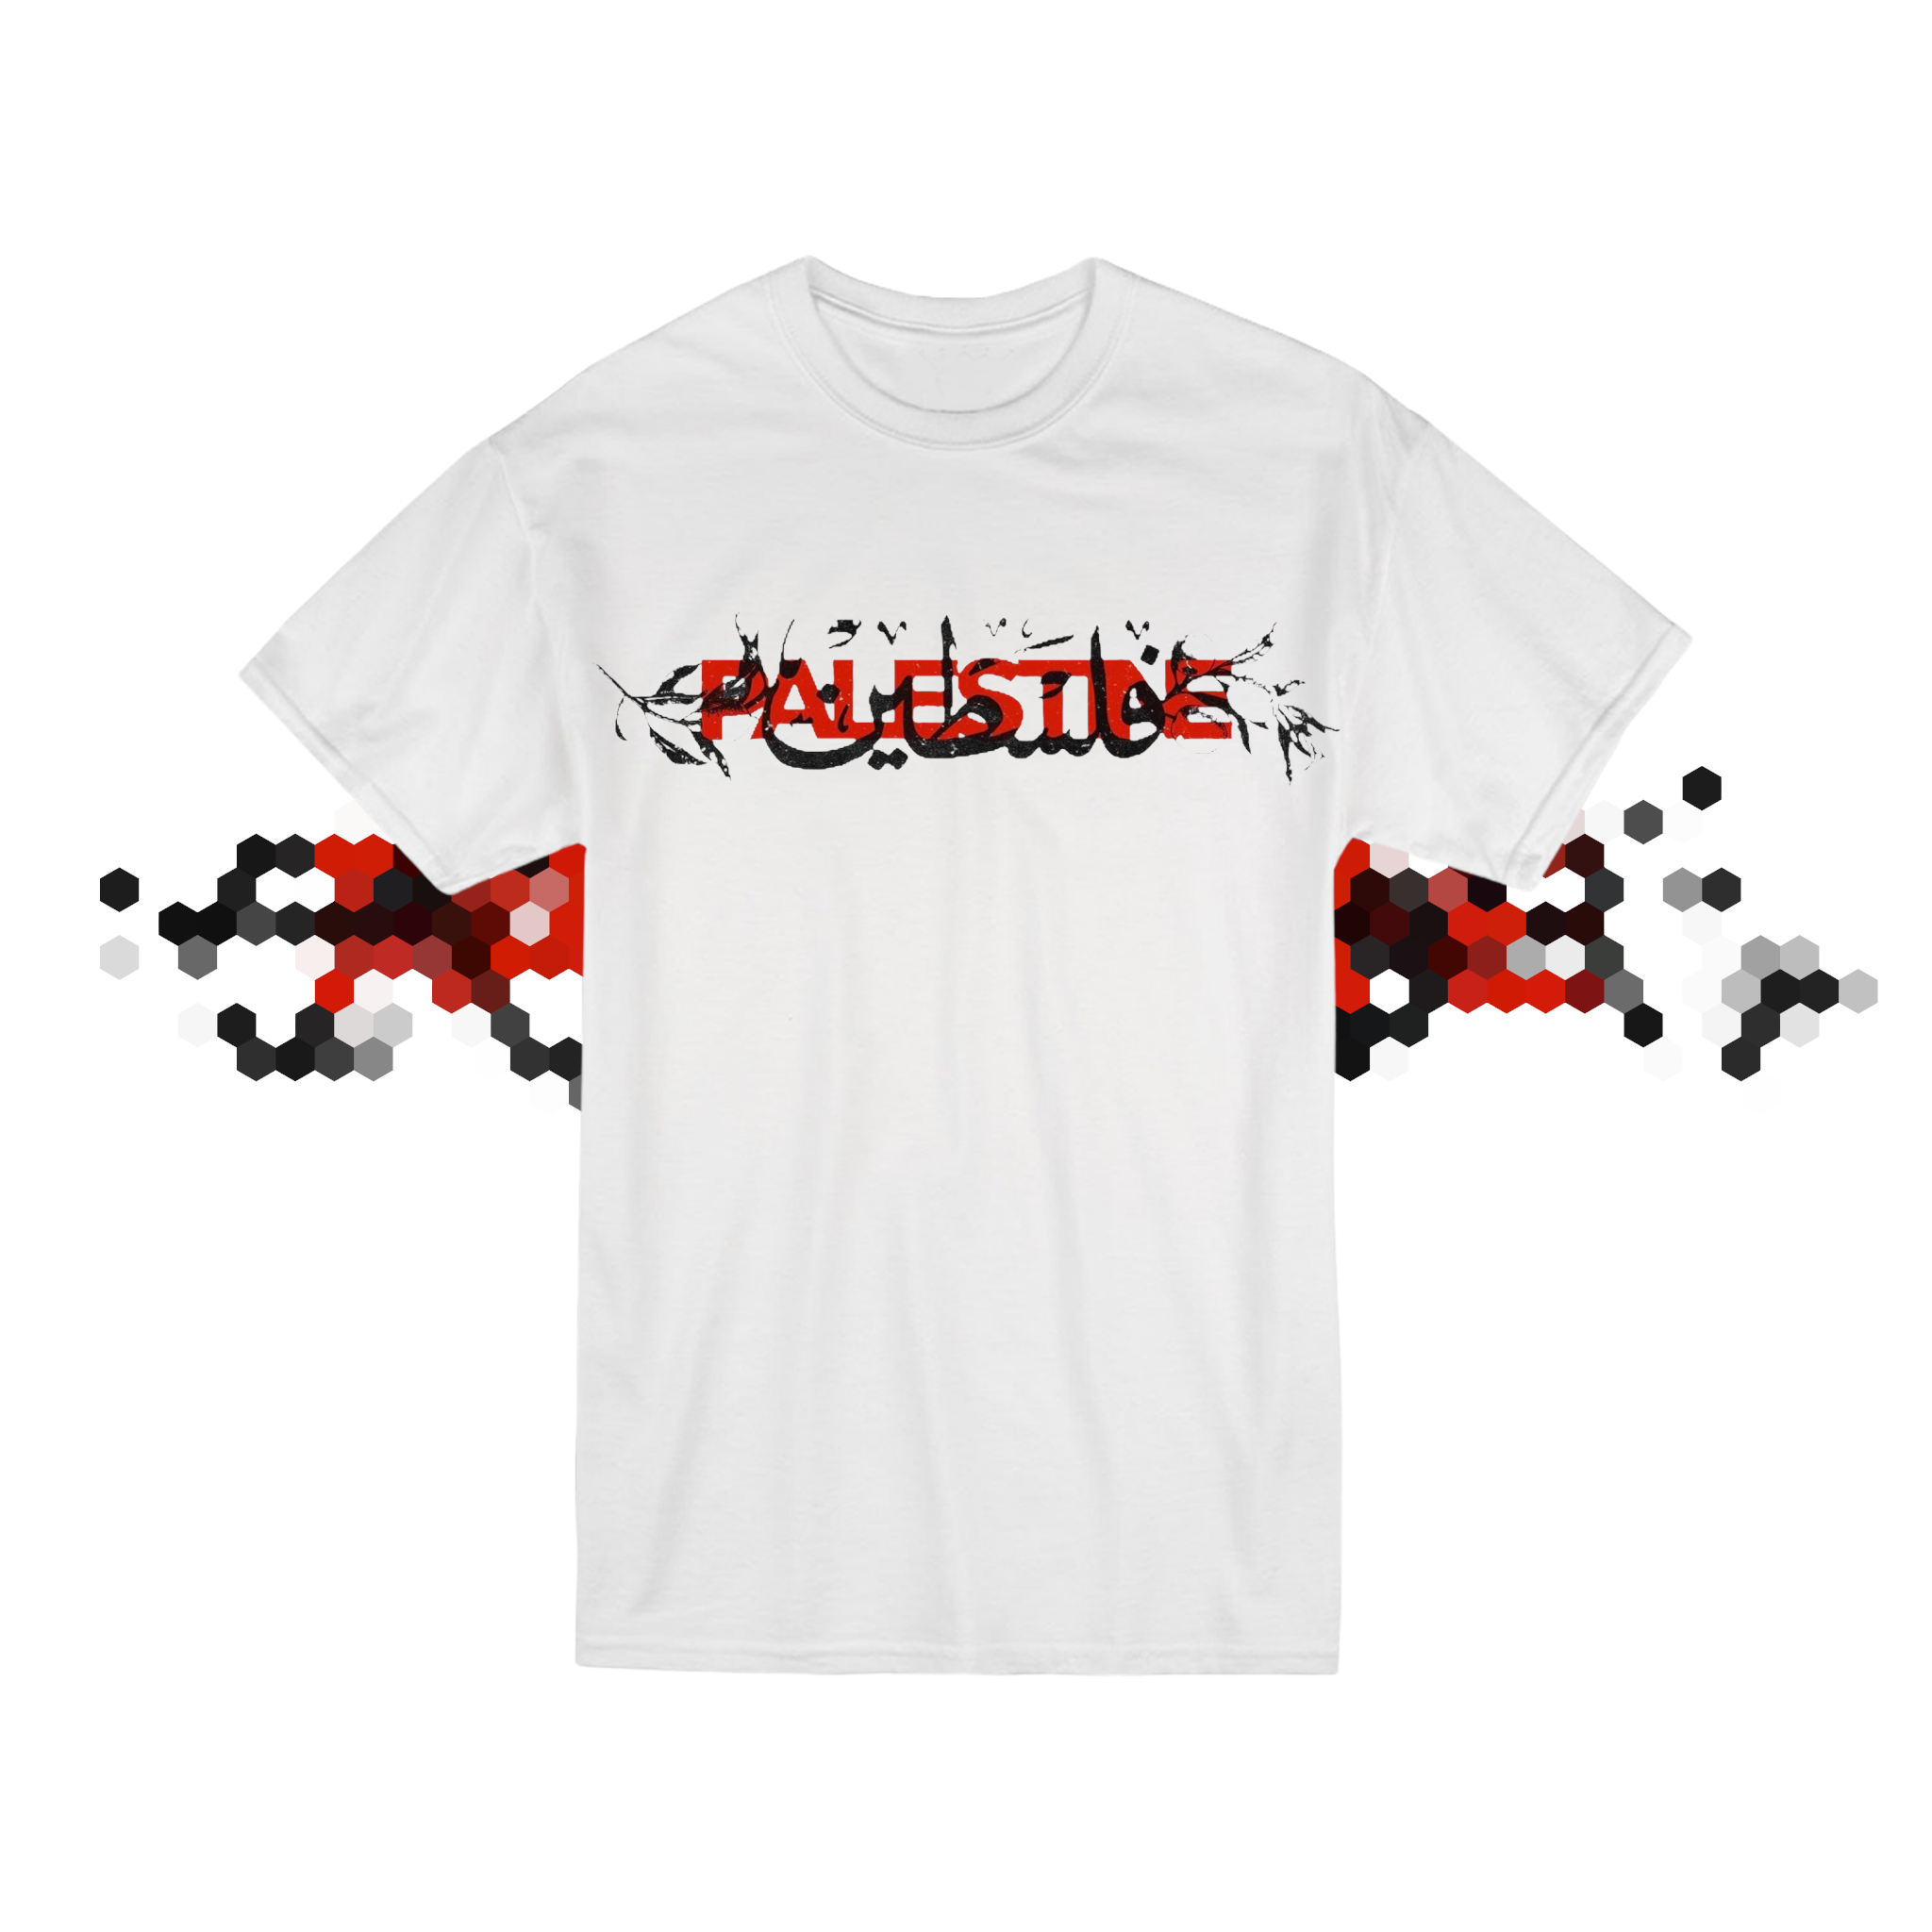 “Palestine”